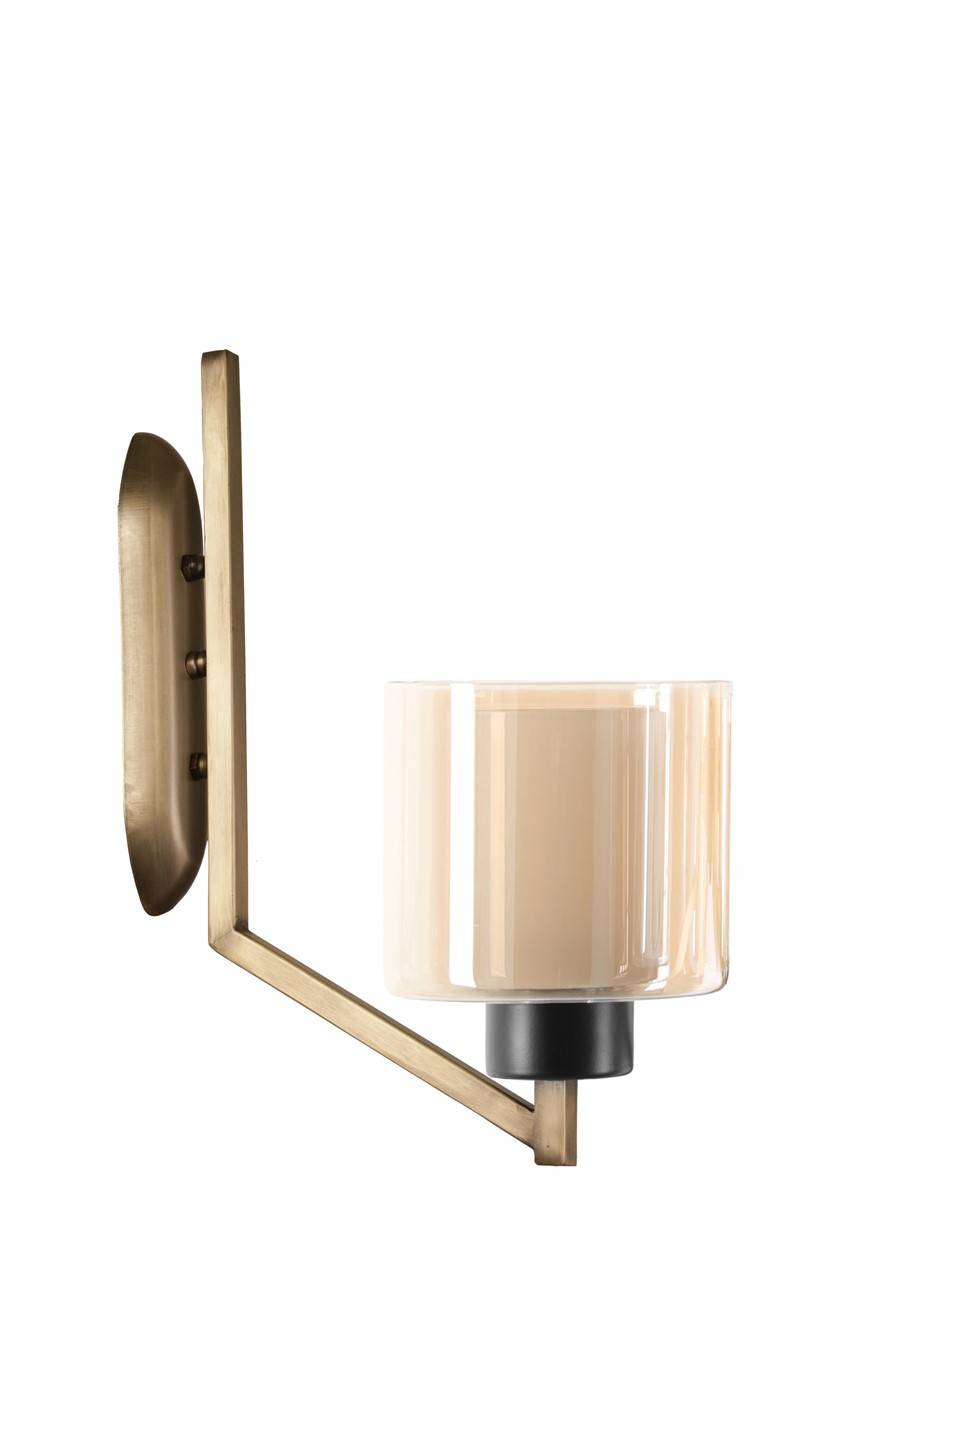 Asinus omgekeerde cilinder wandlamp 15 x 40 x 30 cm Koper metaal